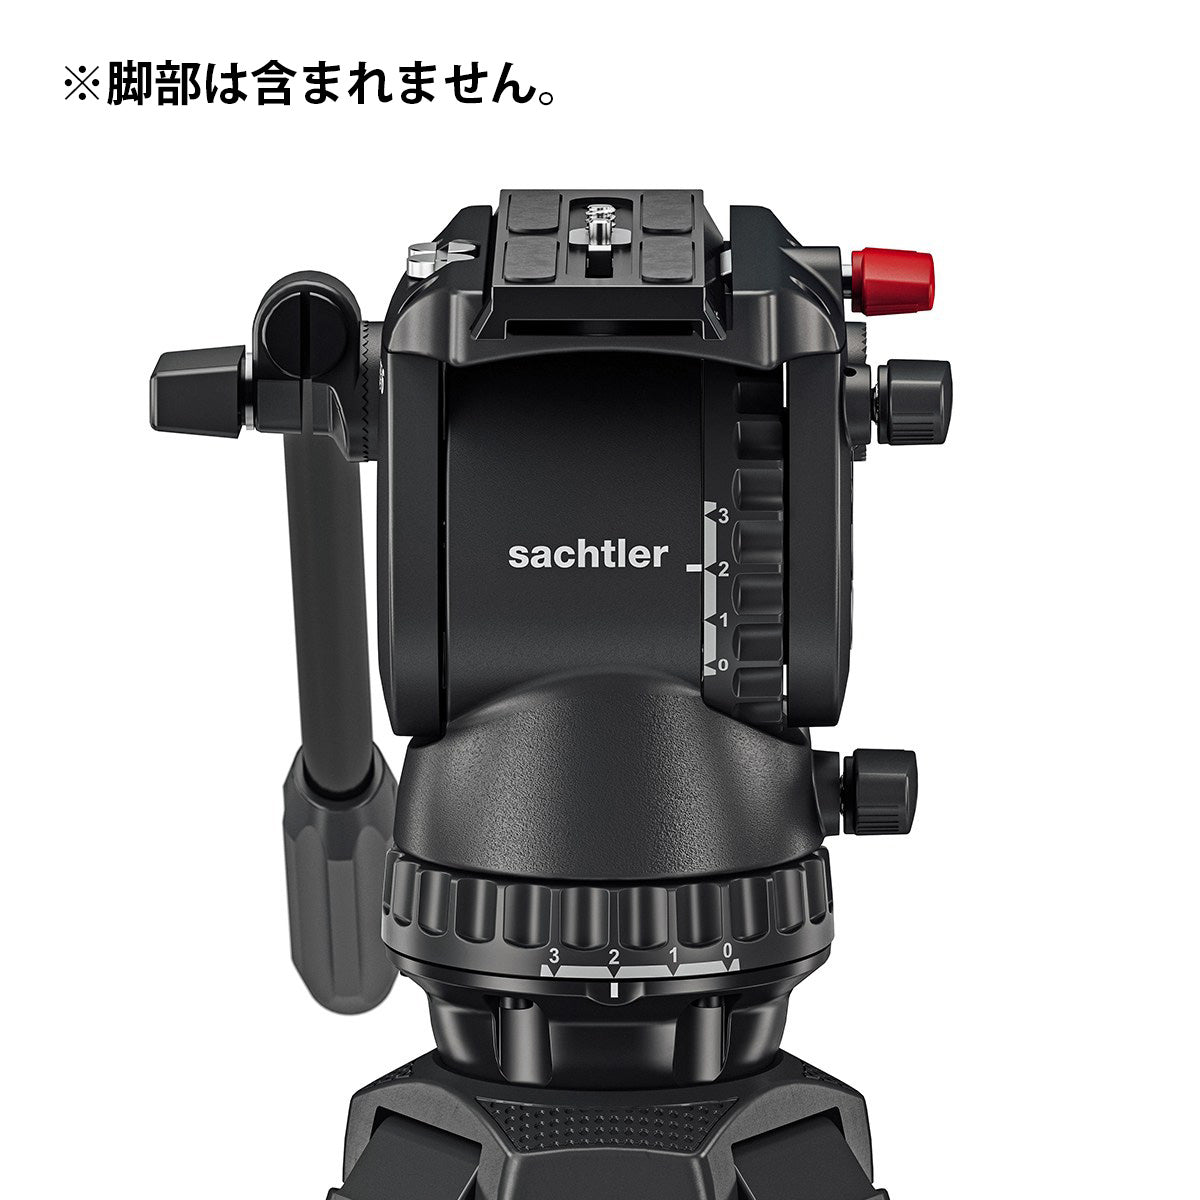 Sachtler(ザハトラー) 75mmヘッド (三脚なし) FSB 6 Mk II [S2065-0001]